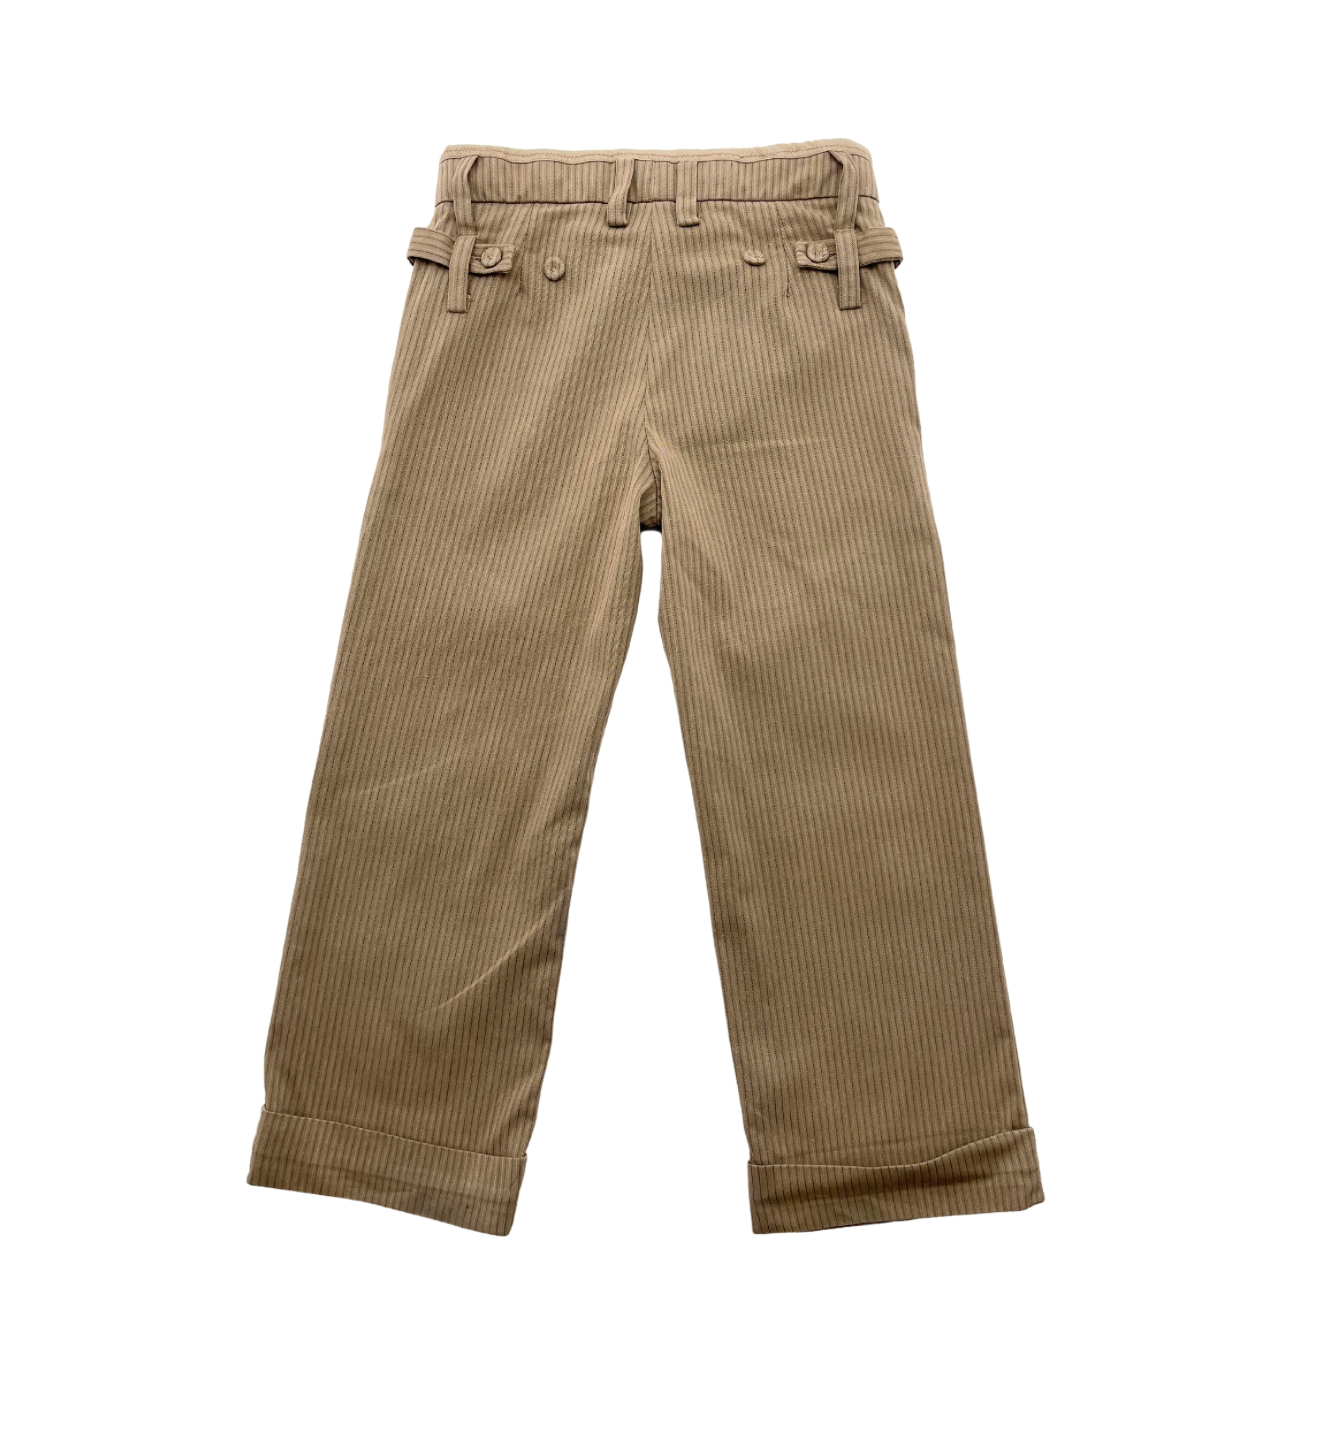 CHLOÉ - Pantalon marron à rayures - 4 ans